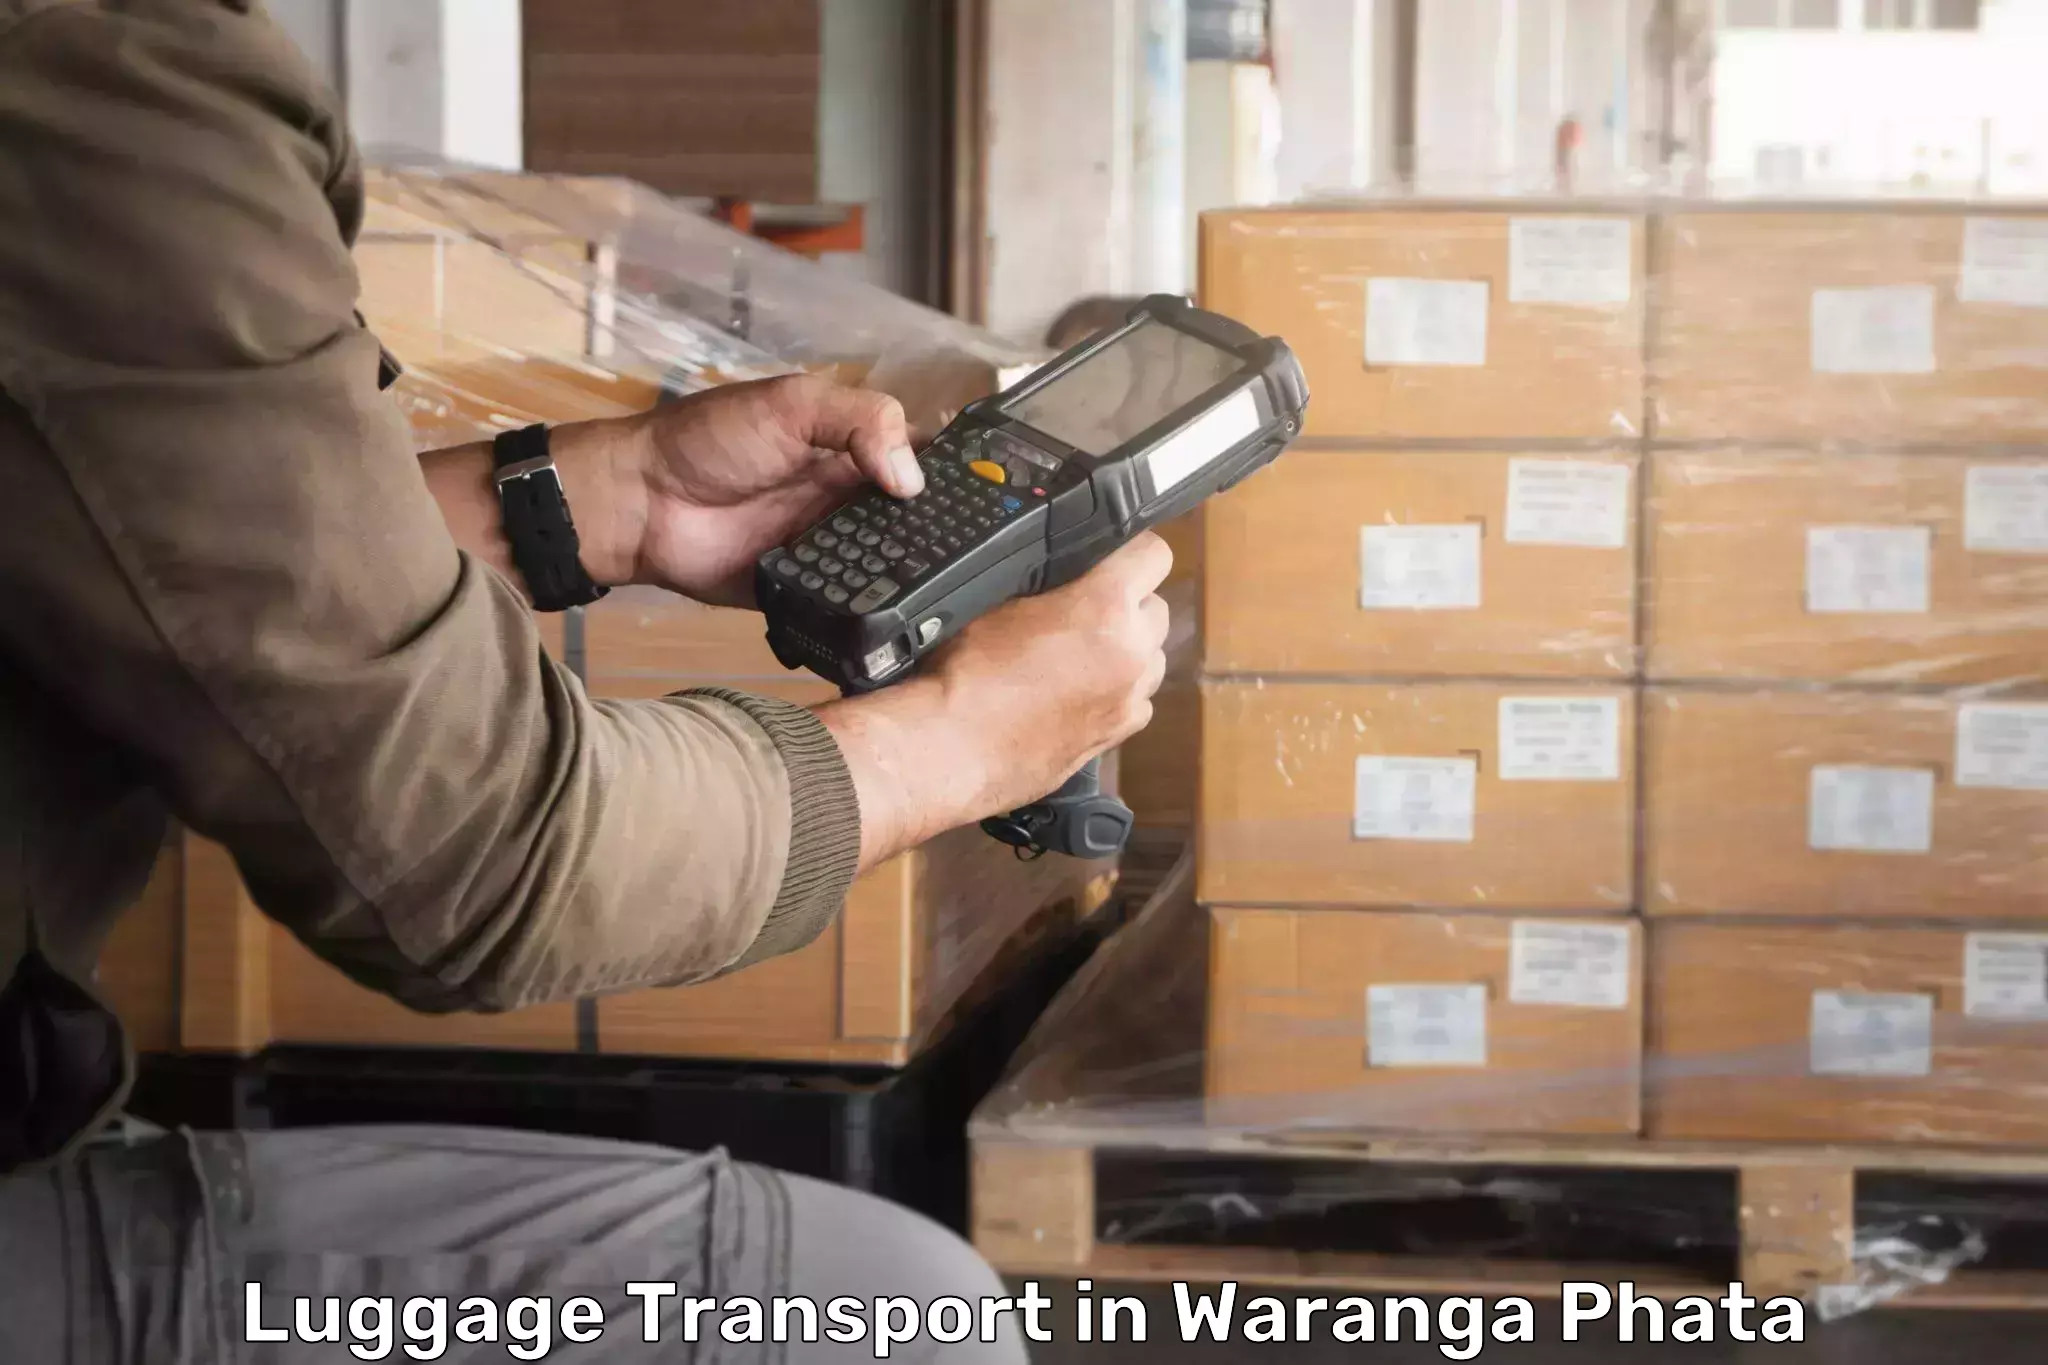 Corporate baggage transport in Waranga Phata